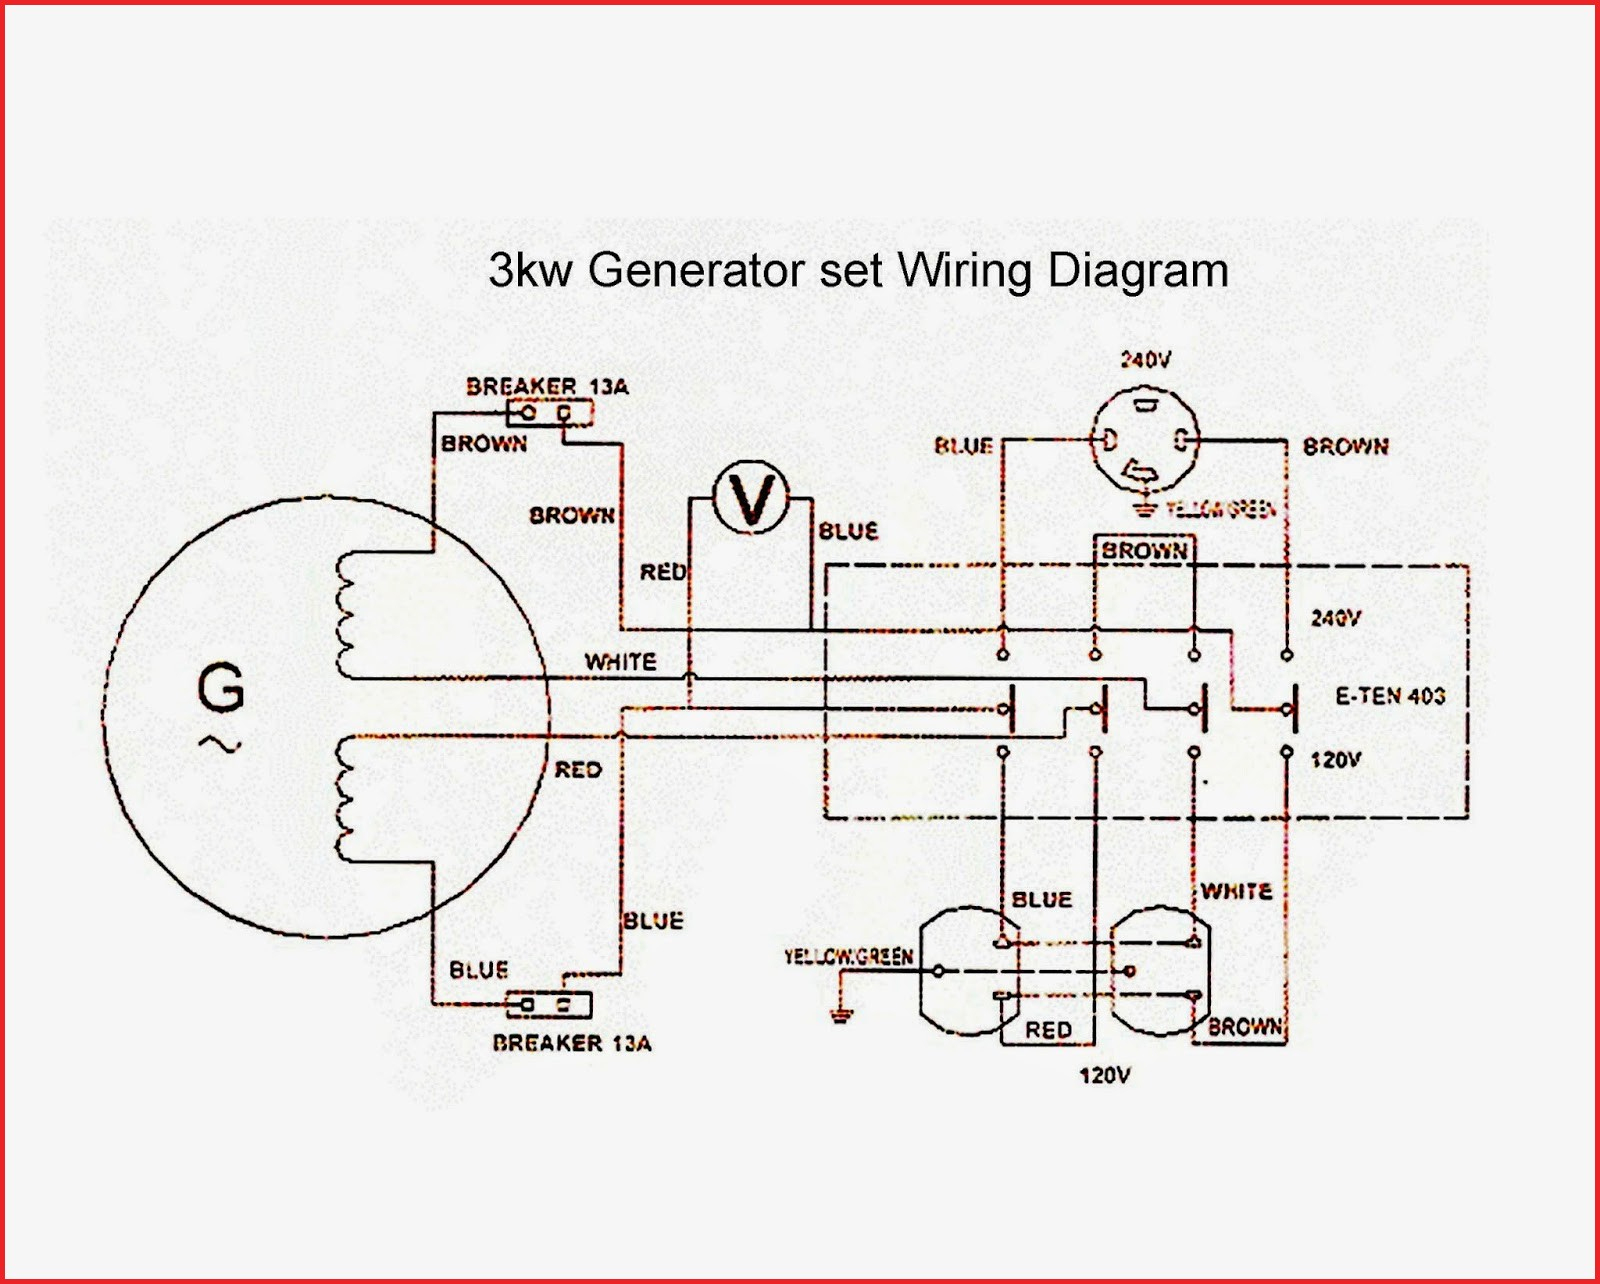 Wiring Diagram Creator - All Wiring Diagram Data - Wiring Diagram Creator